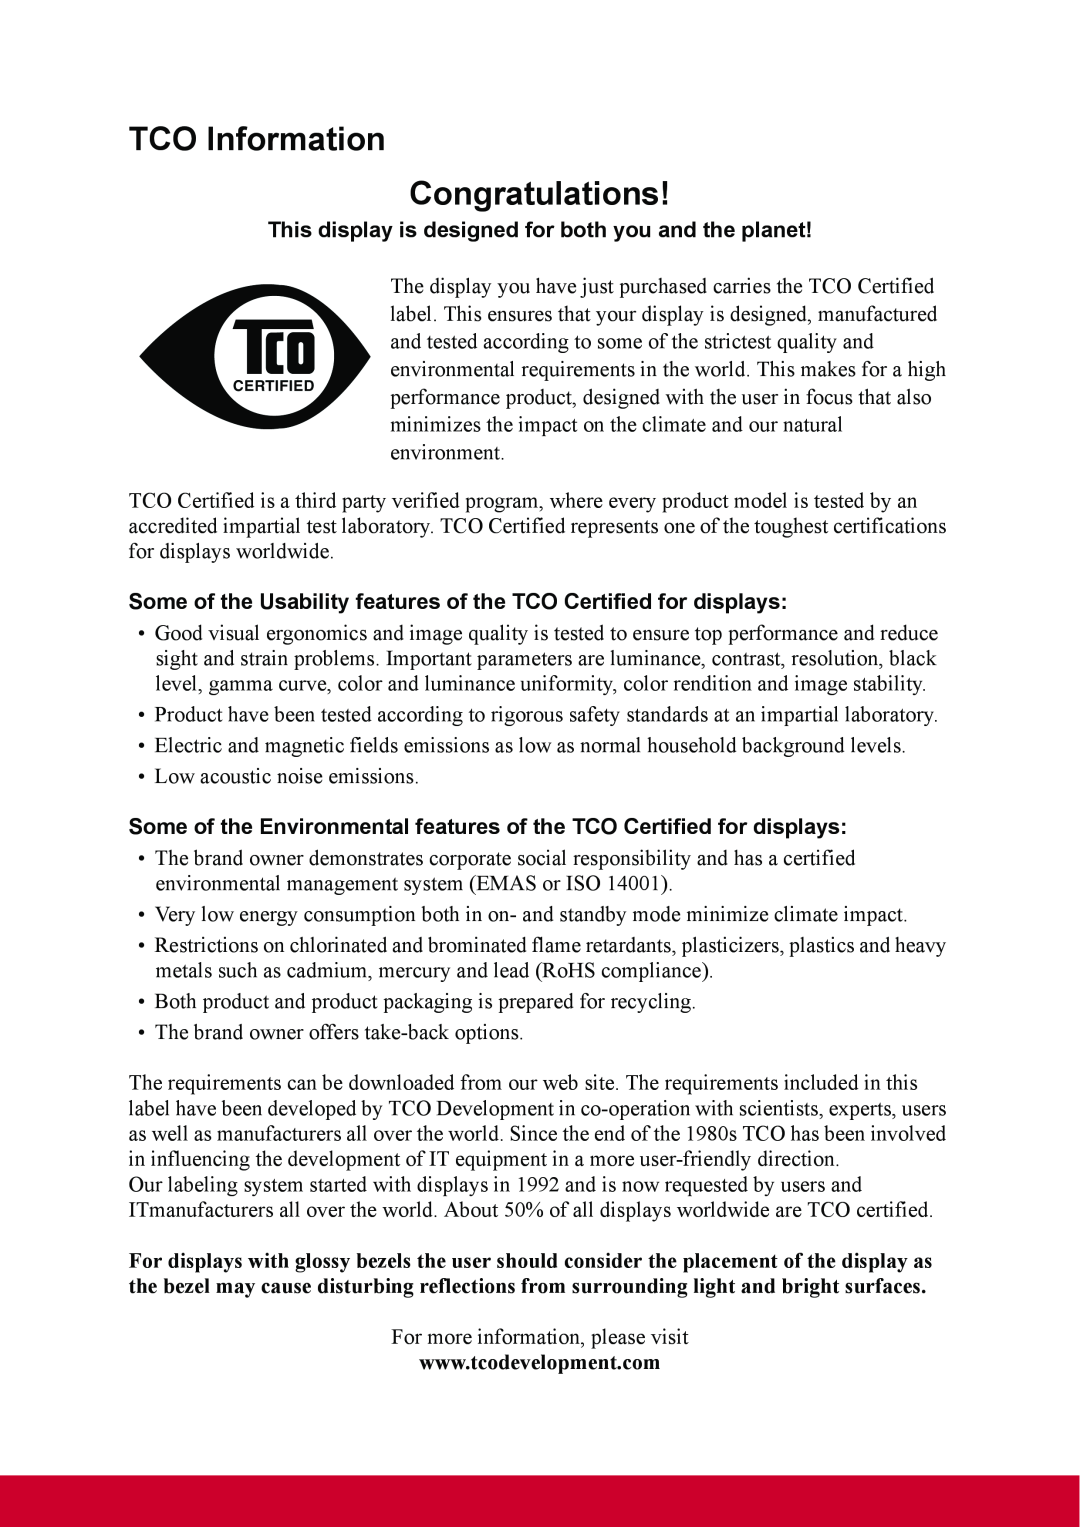 ViewSonic VA1912m-LED warranty TCO Information Congratulations 